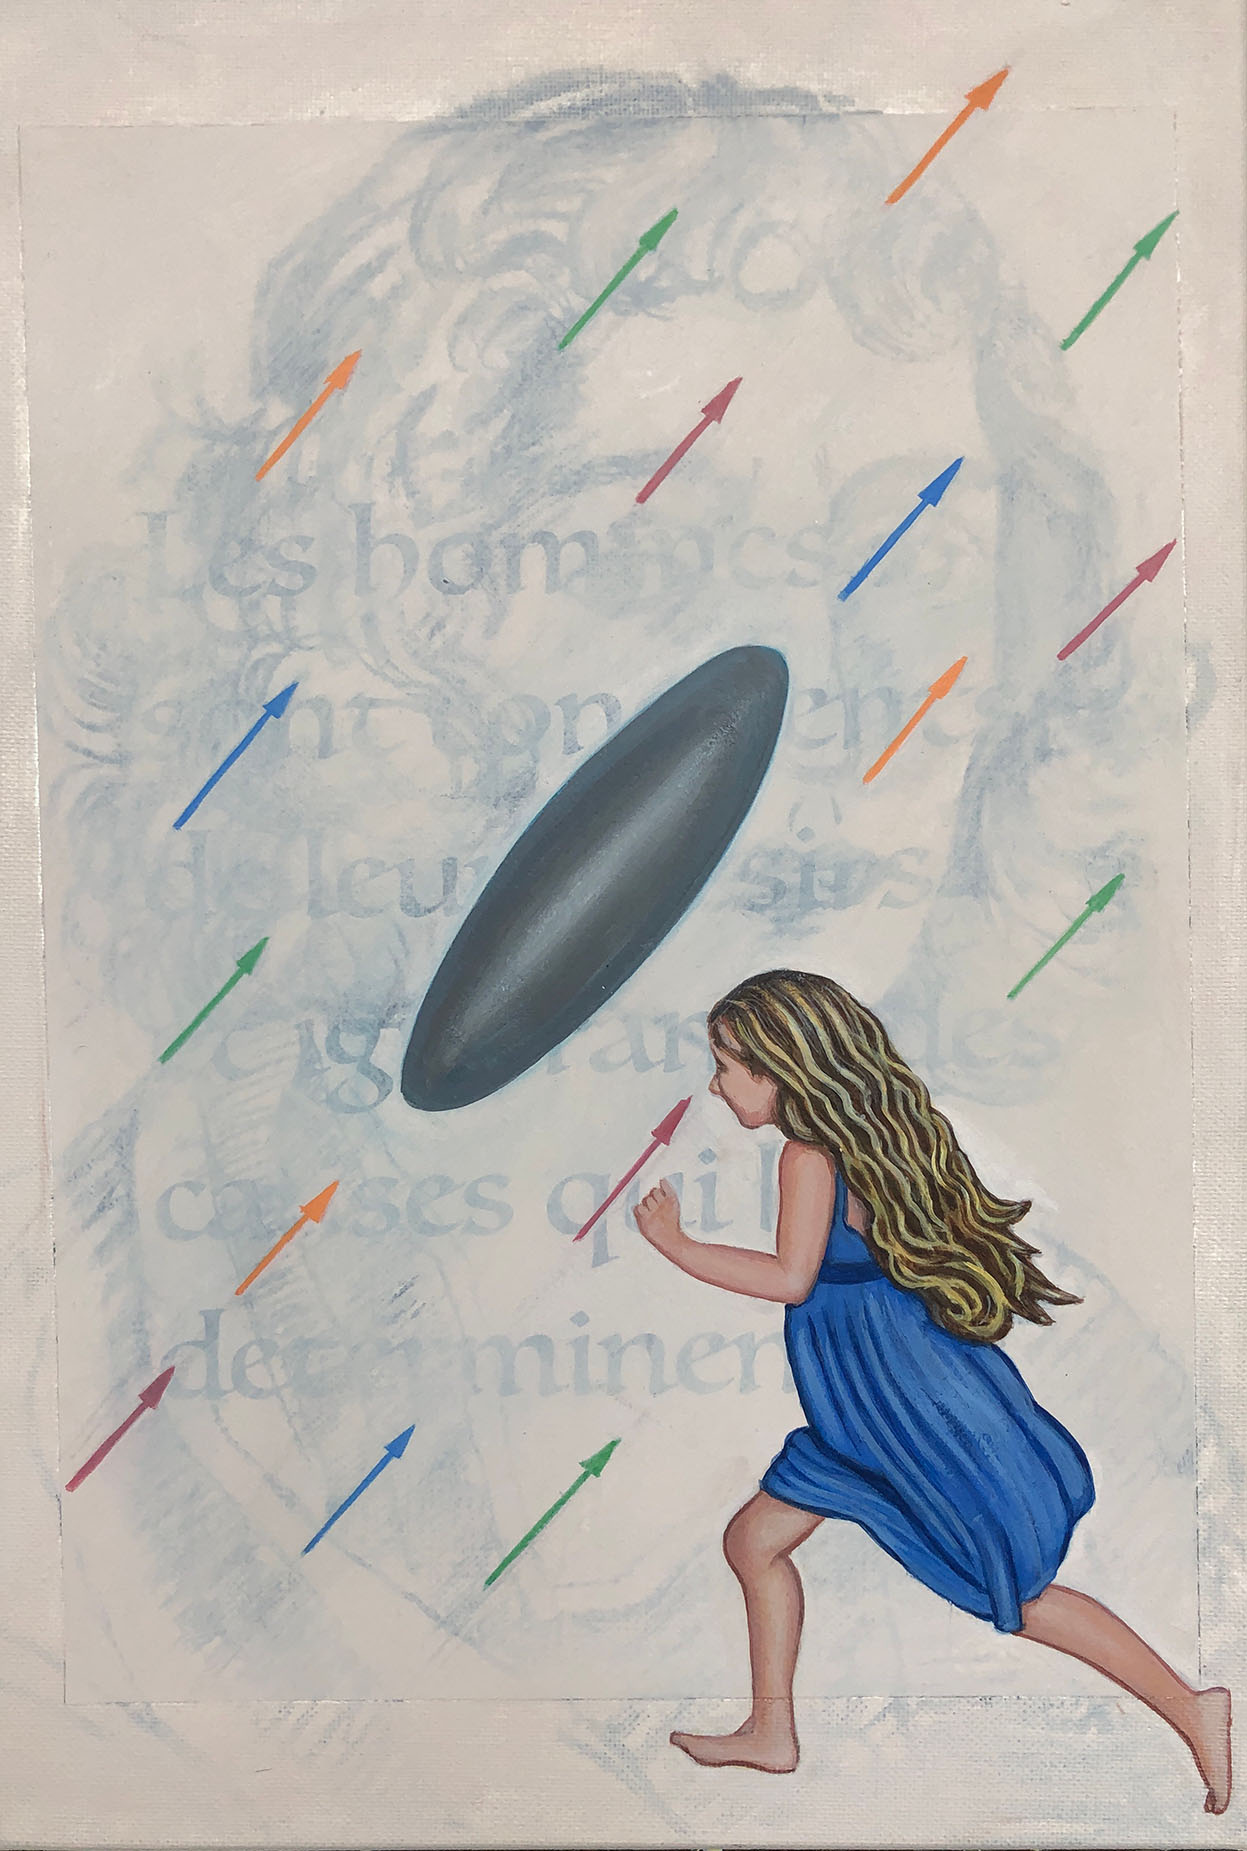 Cristina Ruiz Guinazu, La liberté, collage and acrylics on canvas, 35 x 24 cm, 2019